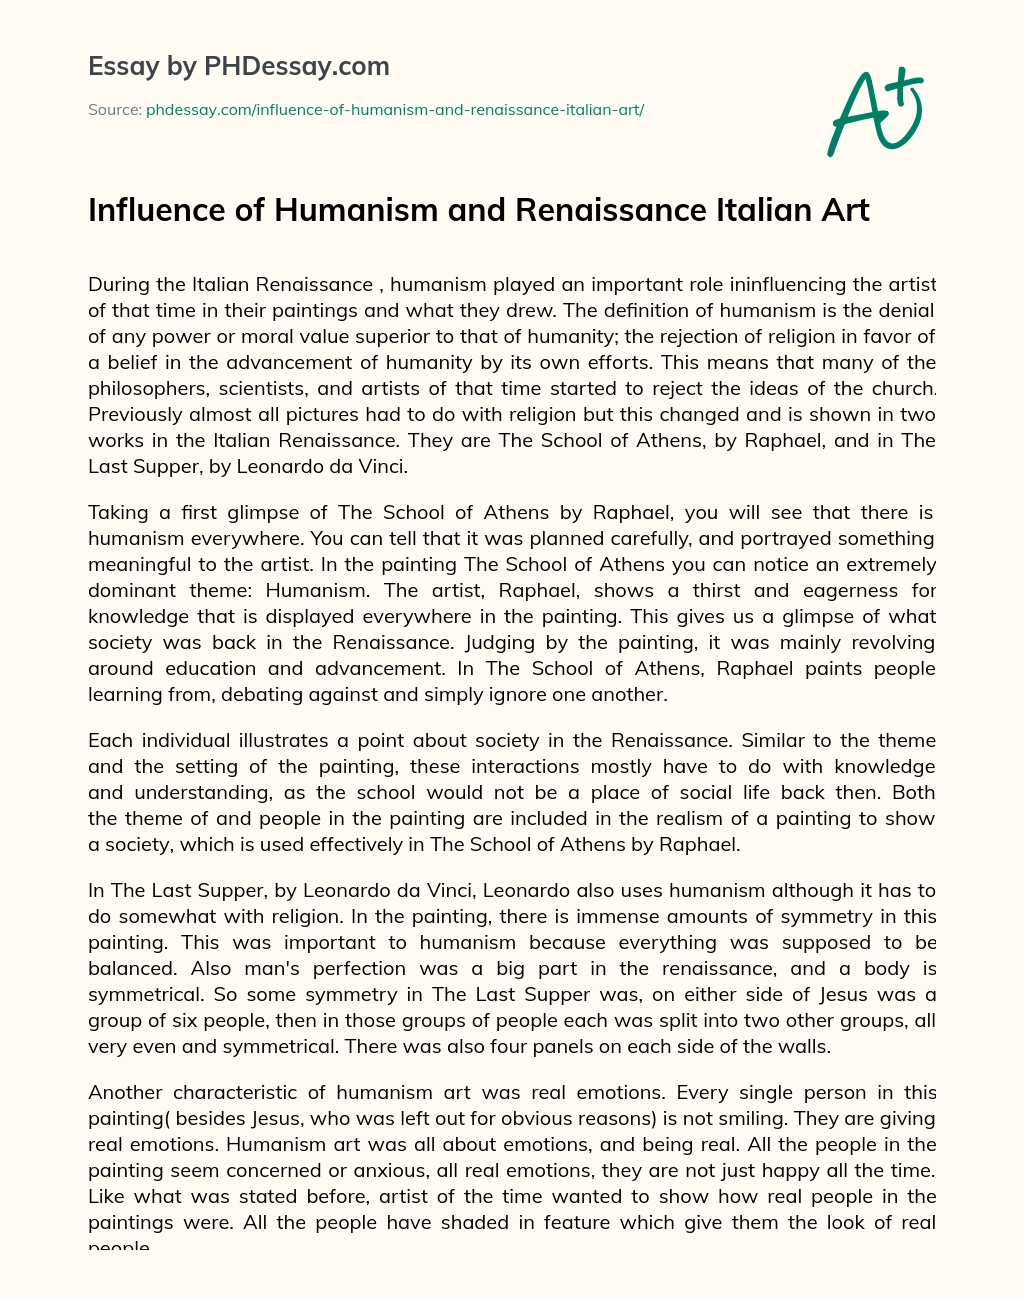 Influence of Humanism and Renaissance Italian Art essay